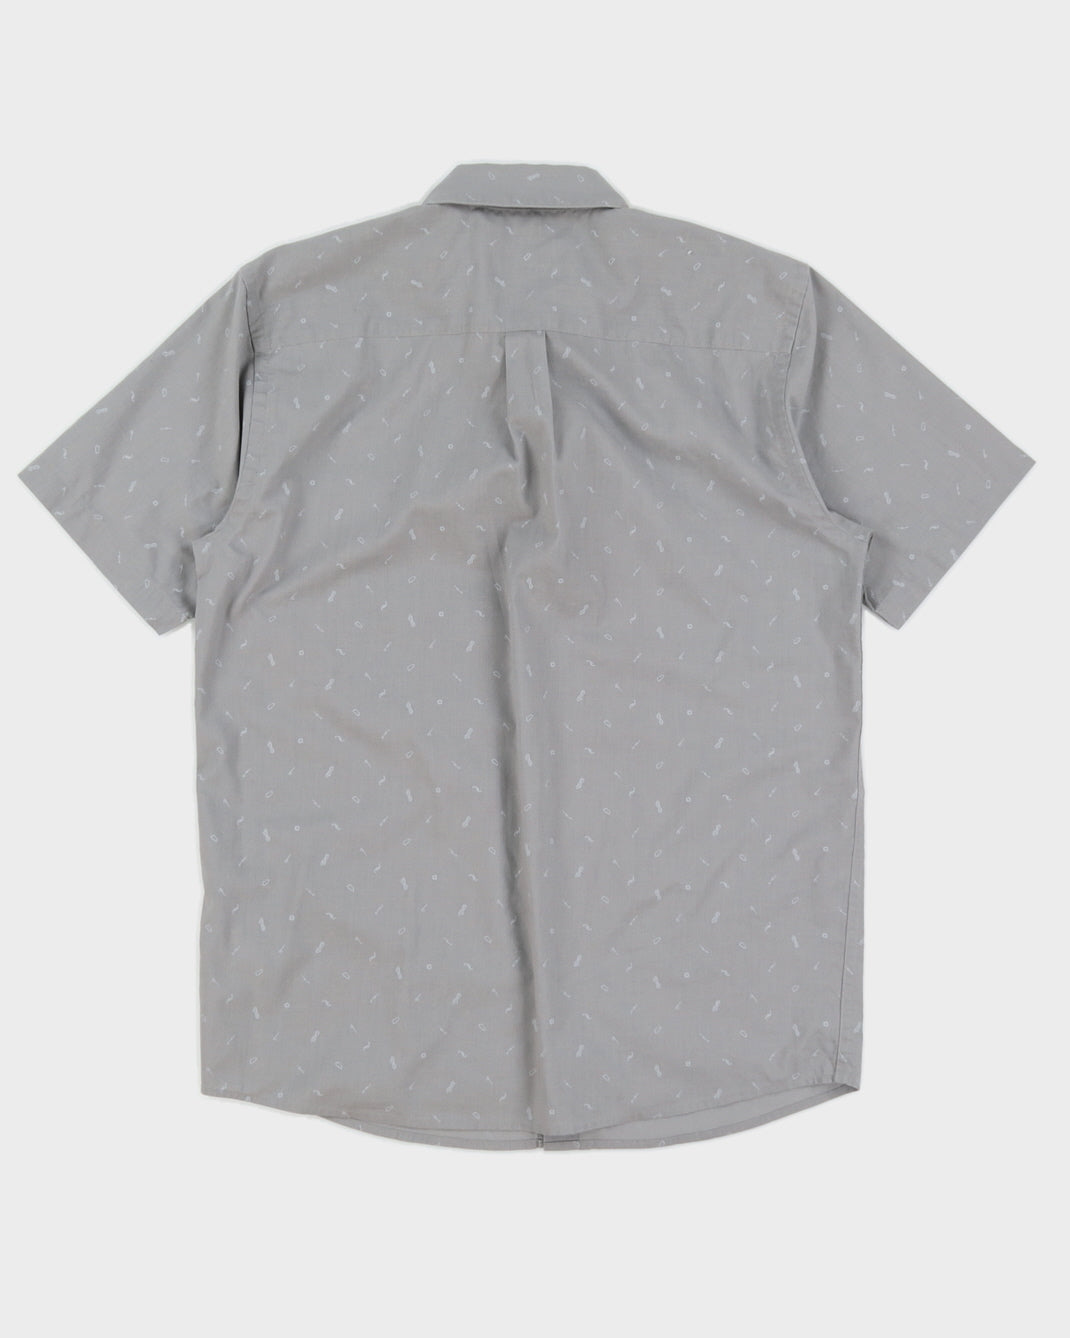 Patagonia Grey Printed Pocket Shirt - M